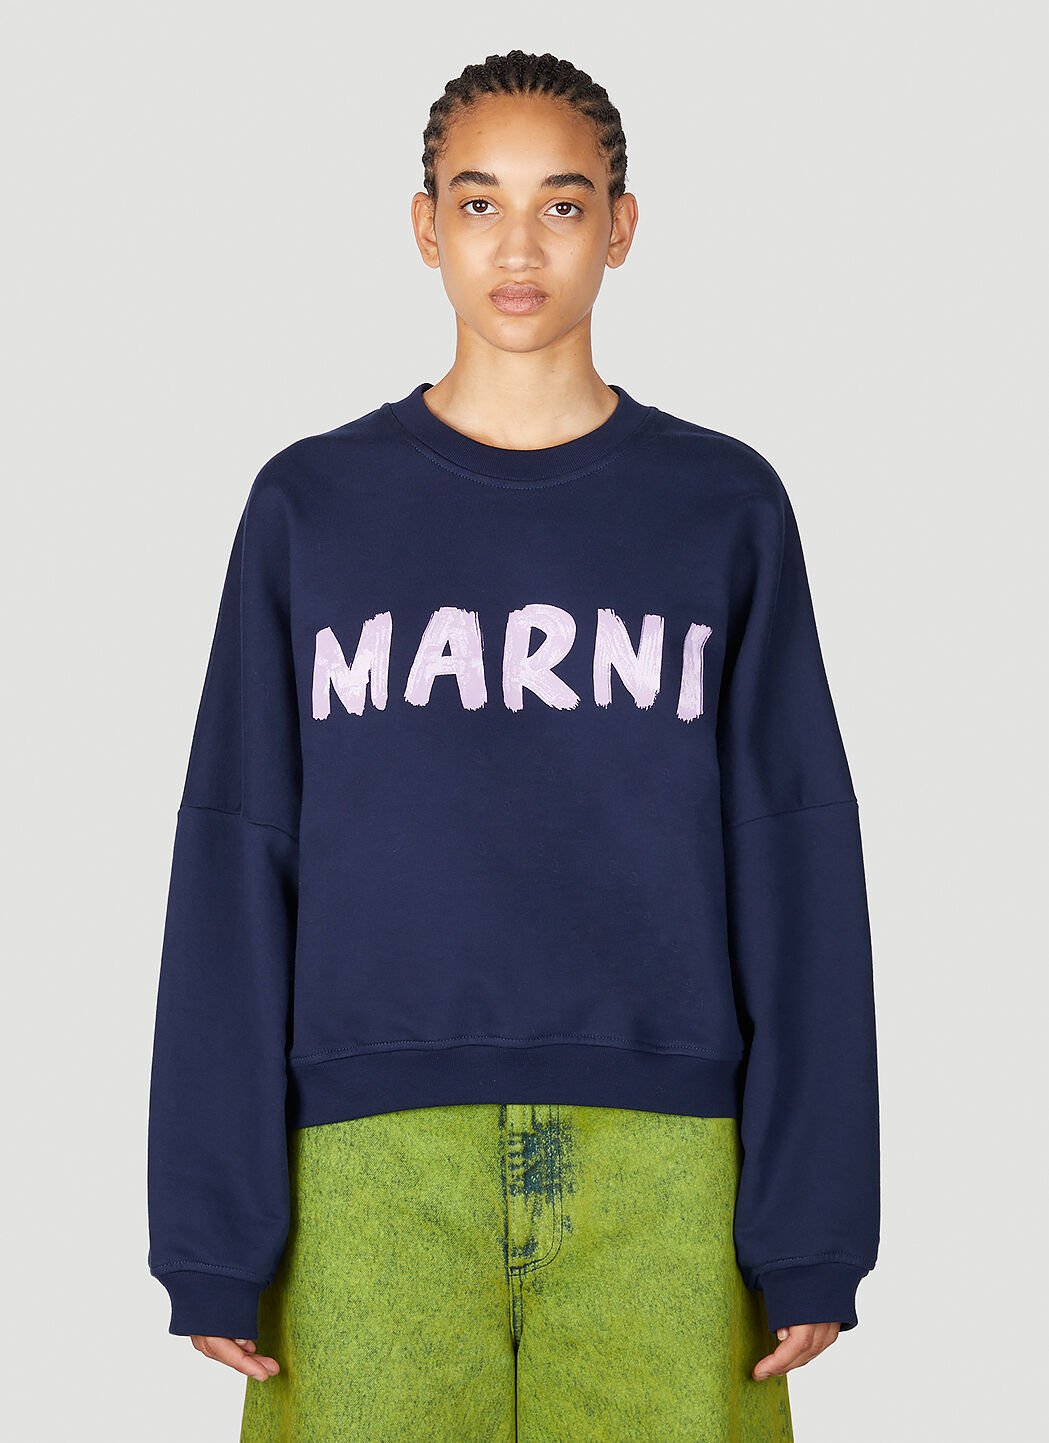 Marni Logo Print Sweatshirt Pink mni0255017